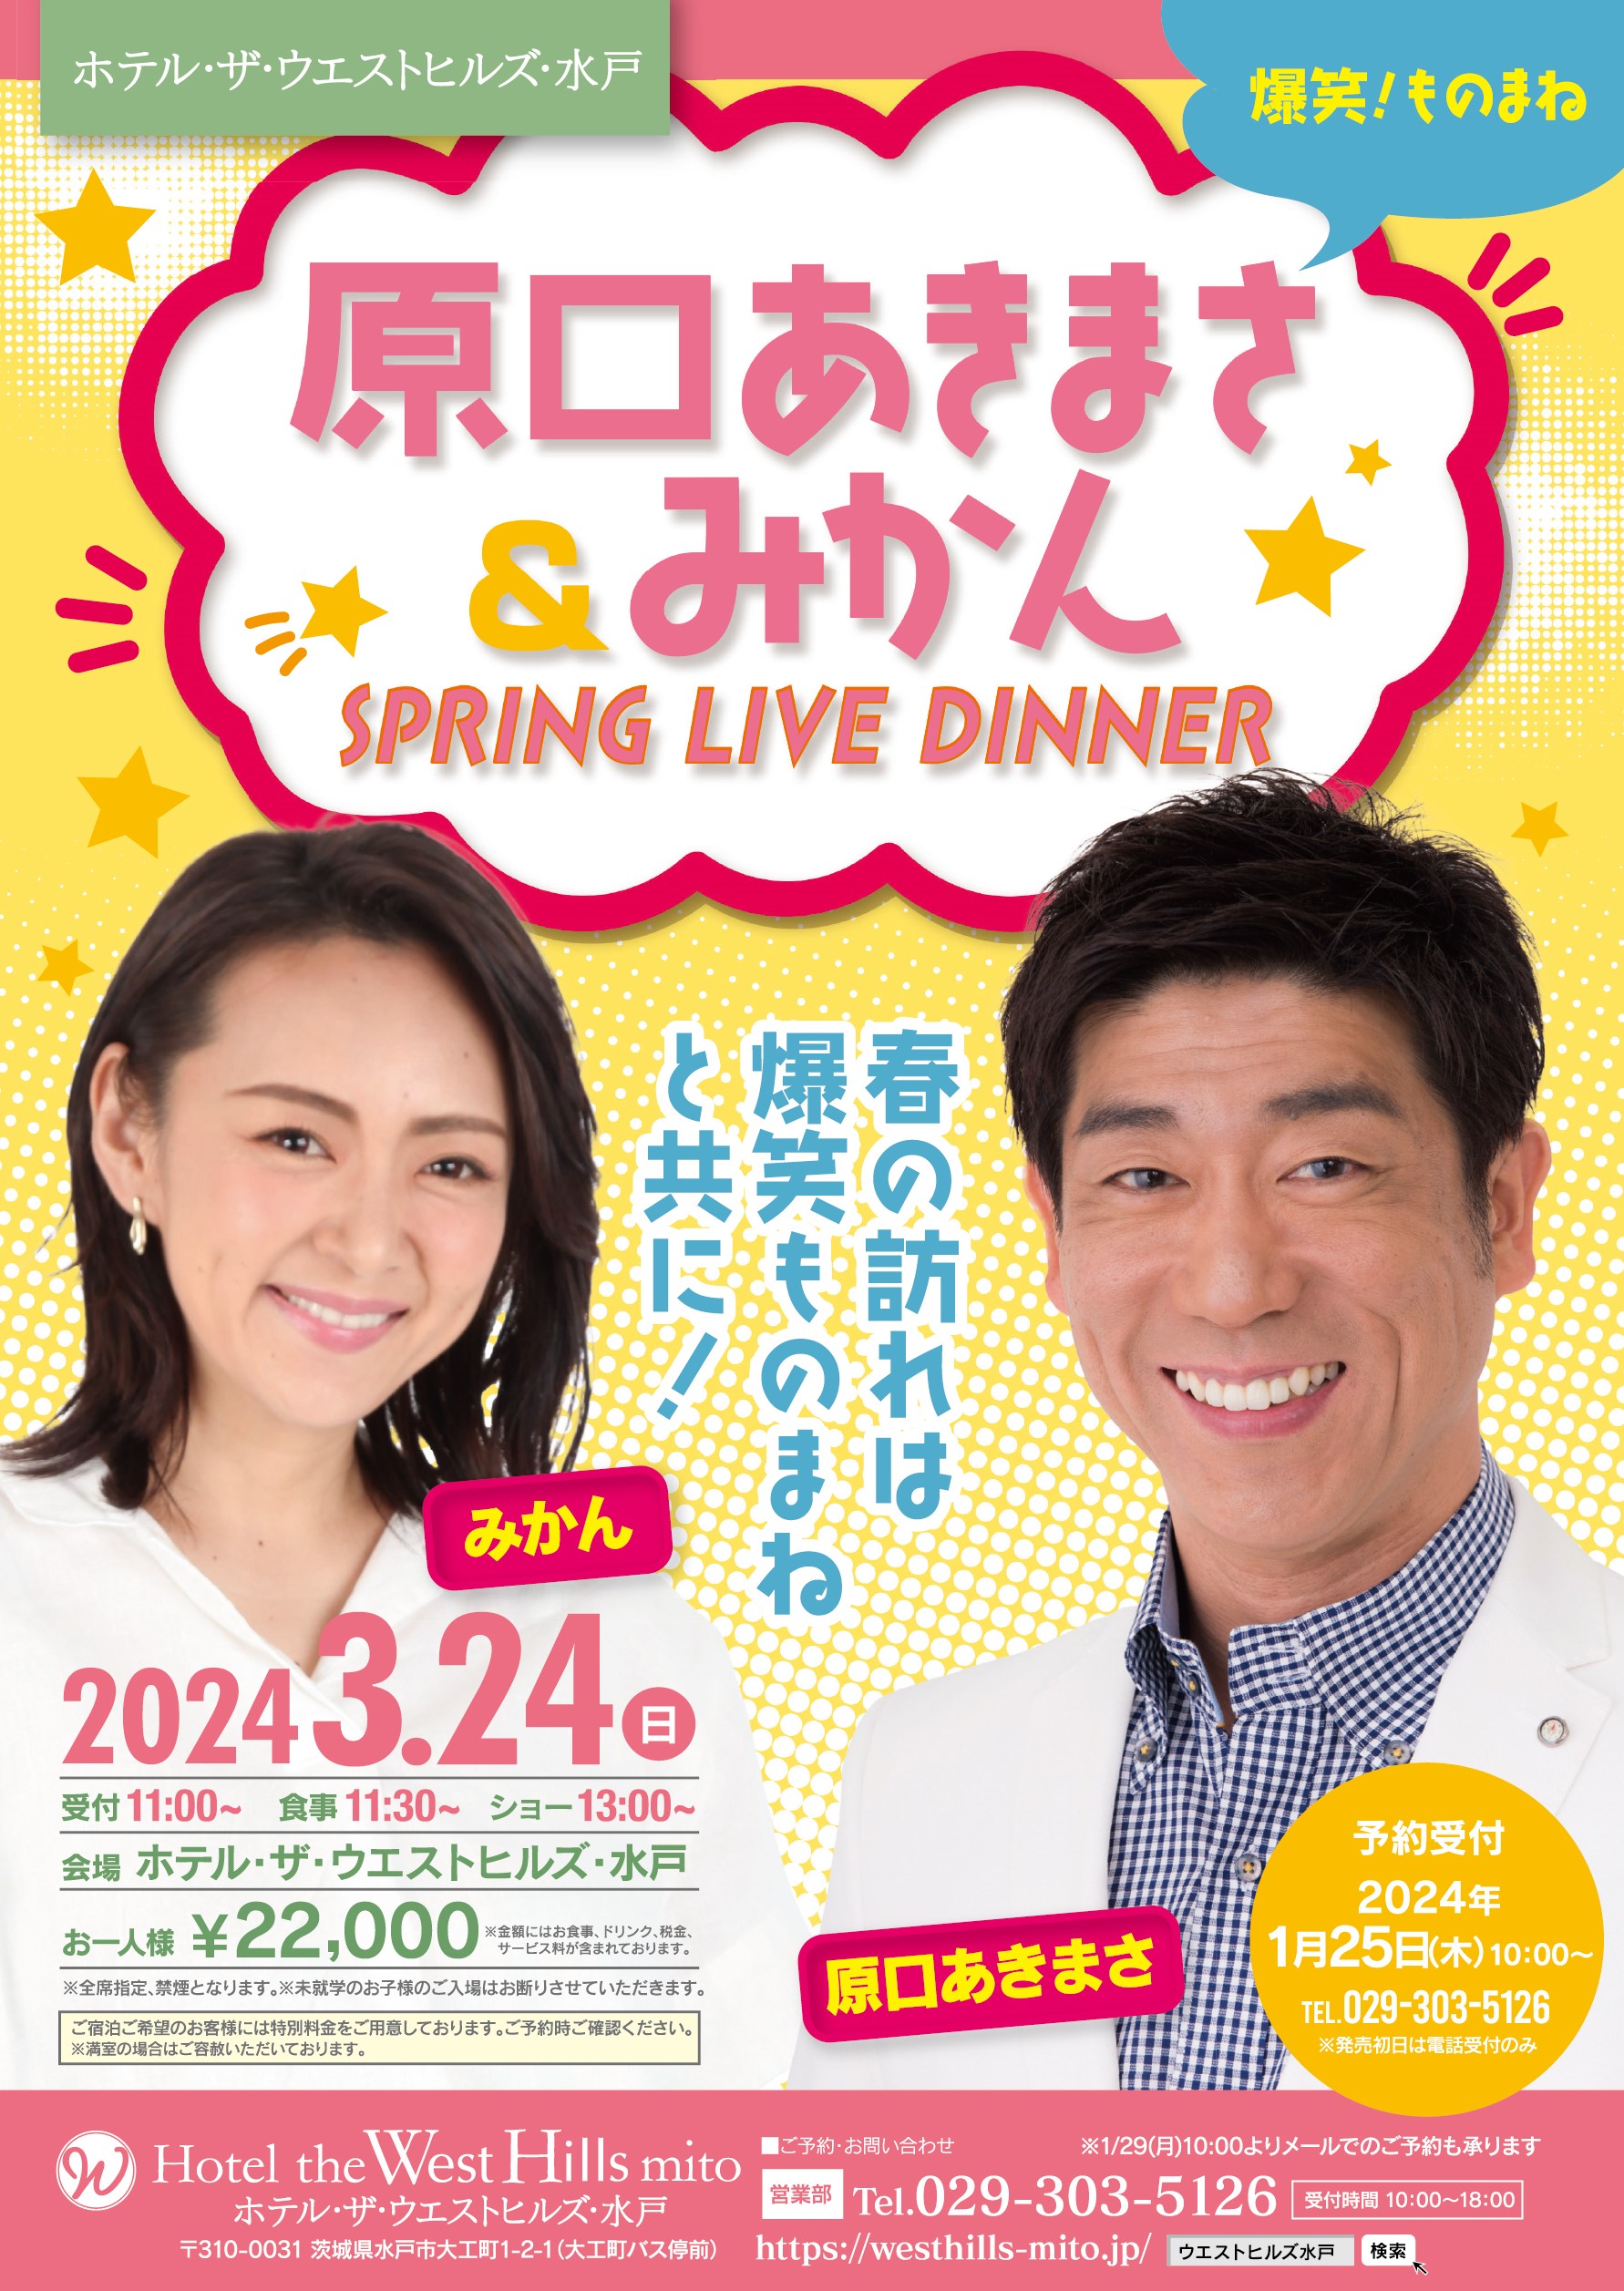 3/24sun 原口あきまさ＆みかん SPRING LIVE DINNER | 【公式】ホテル